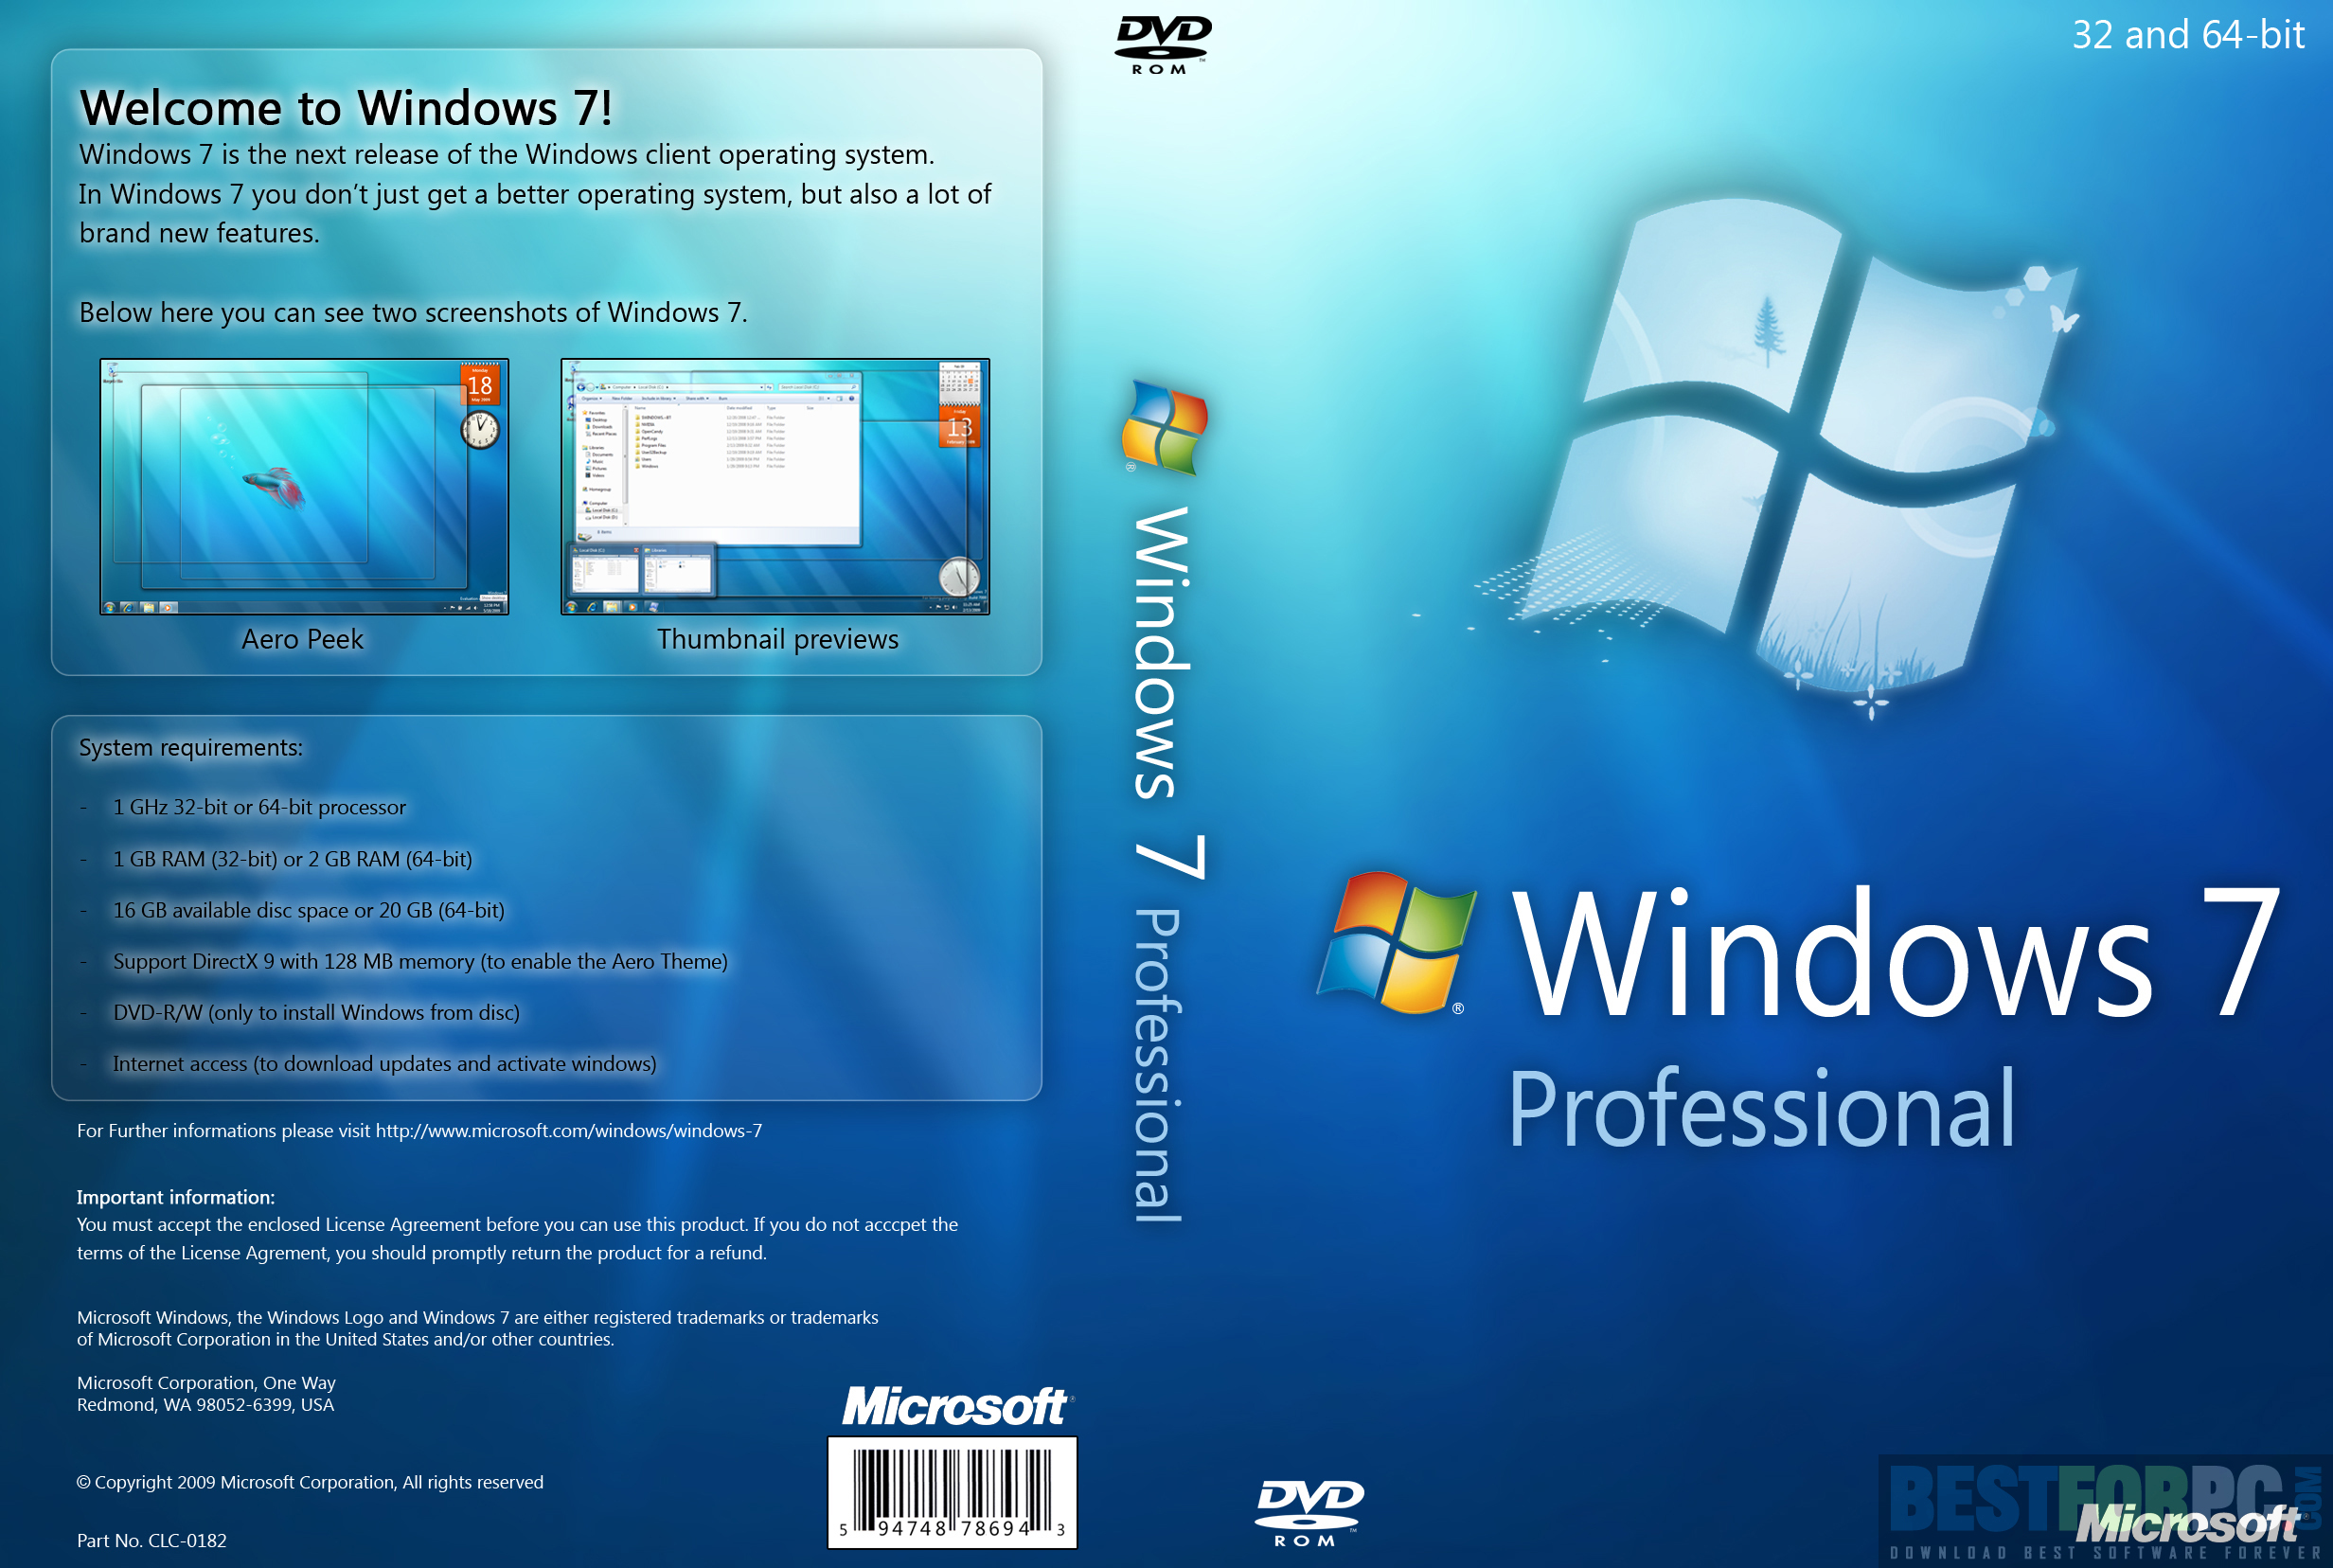 pro tools free download windows 7